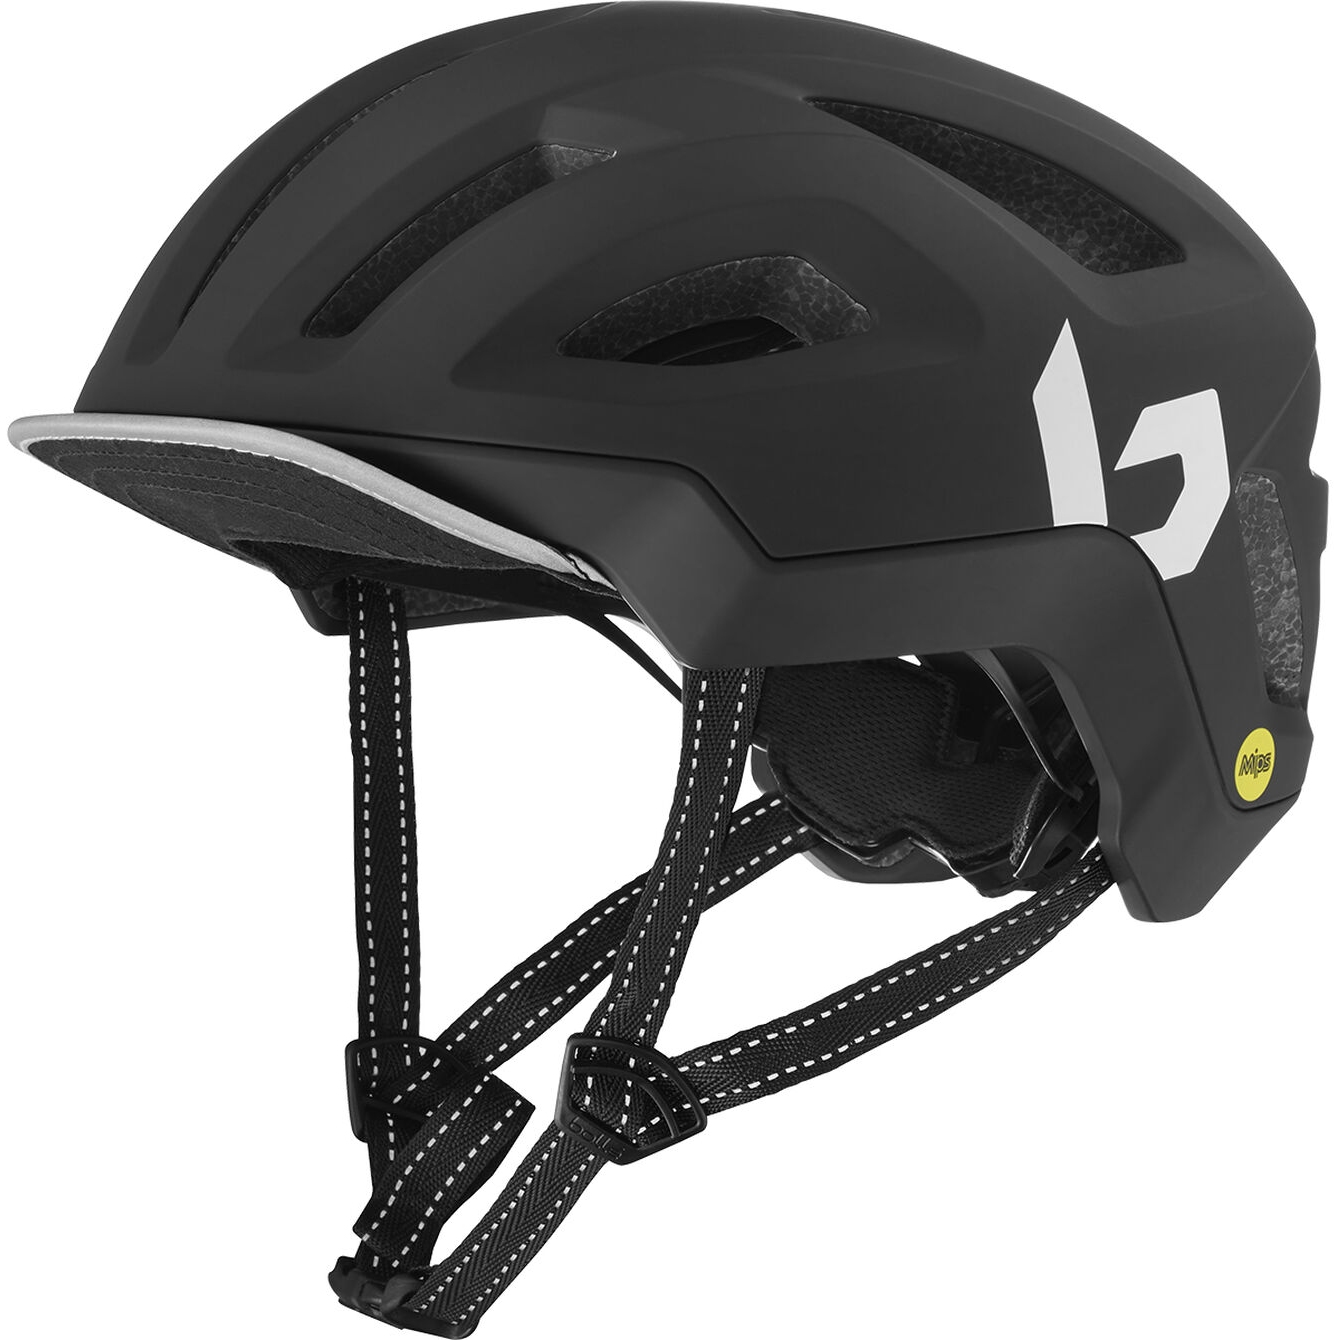 Productfoto van Bollé React MIPS Helm - matte black